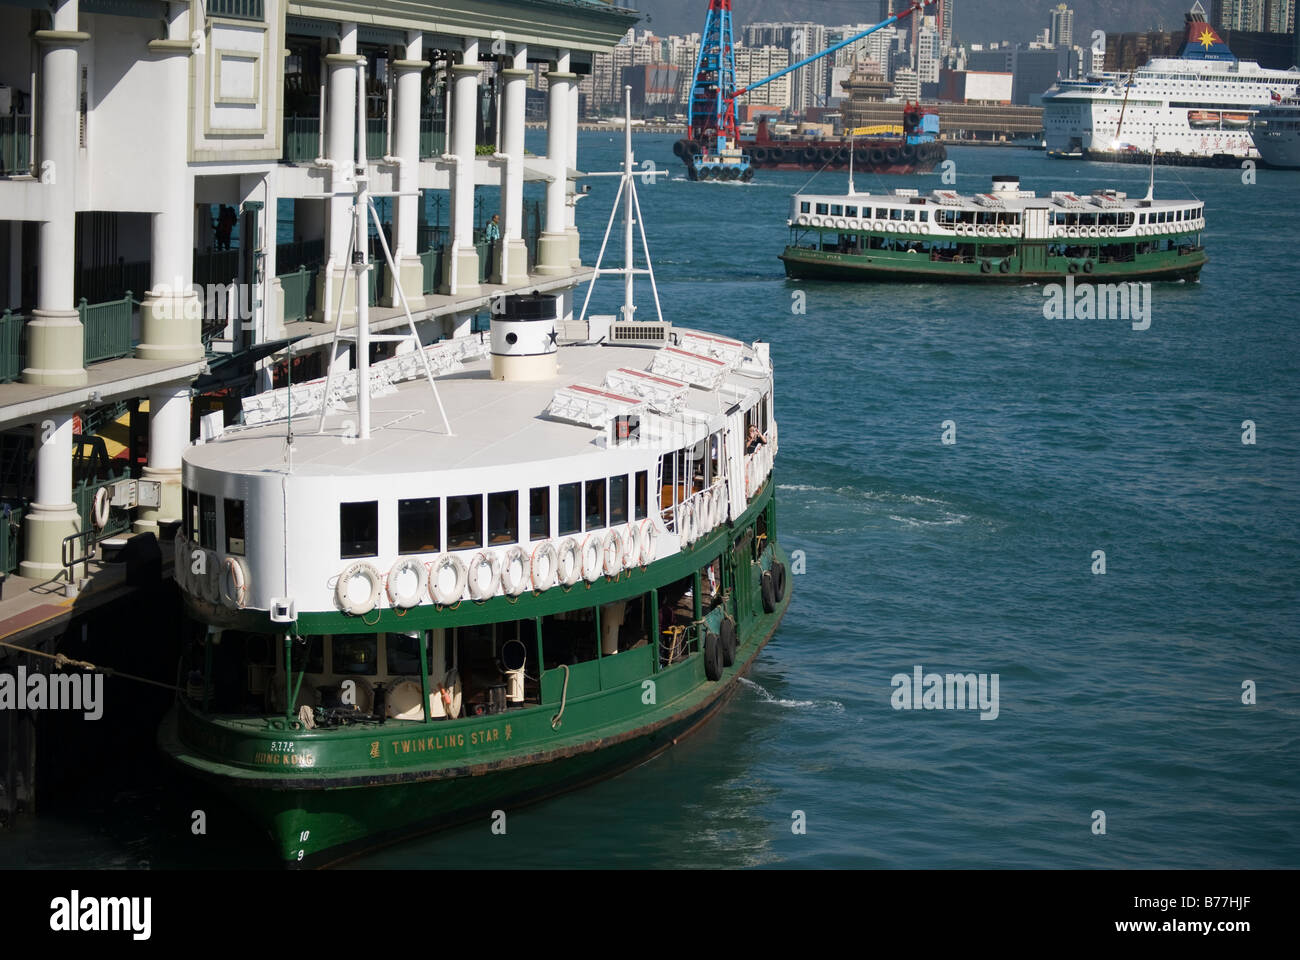 Star Ferry ormeggiato al terminal, Central Pier, Sheung WAN, Victoria Harbour, Hong Kong Island, Hong Kong, Repubblica popolare cinese Foto Stock